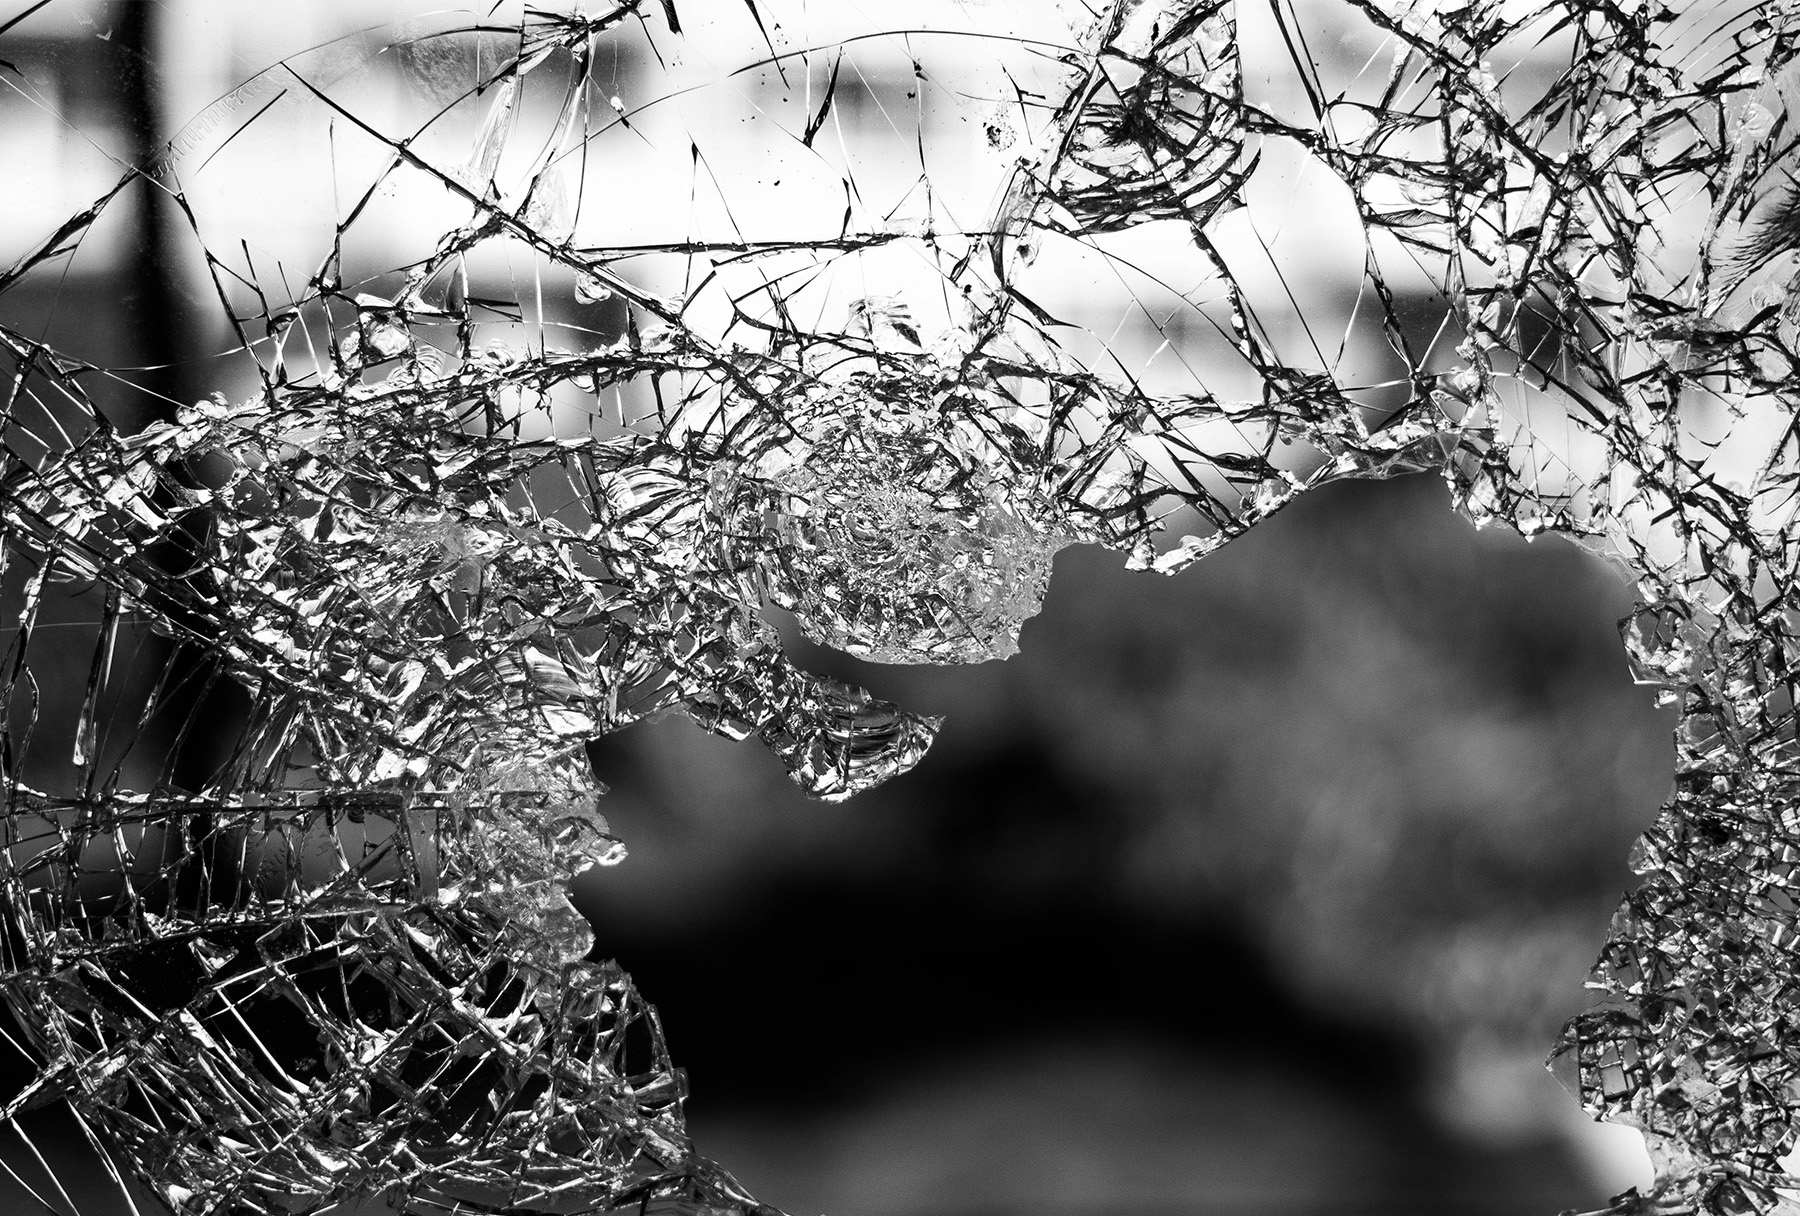 Close-up photo of broken glass